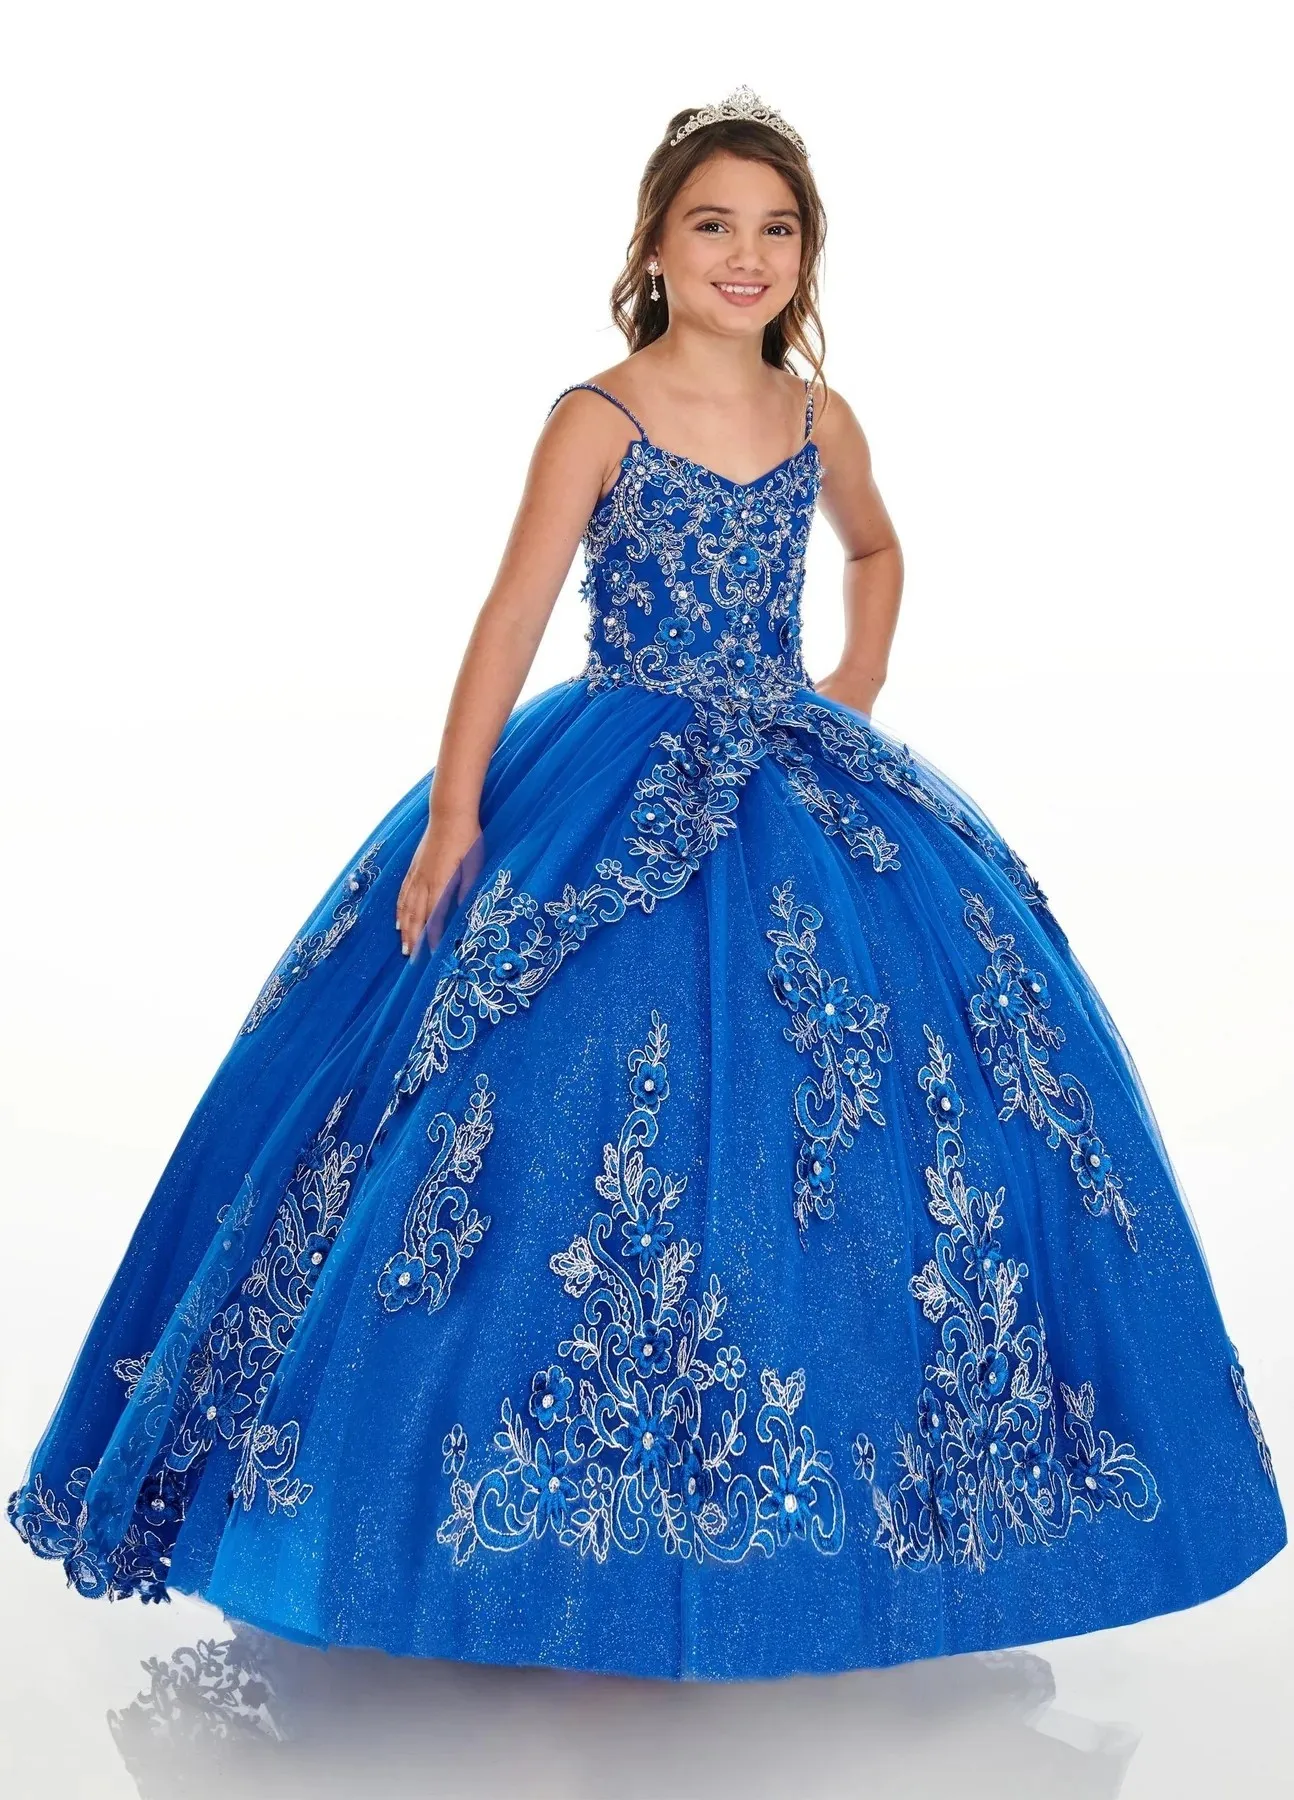 vestido rey niña – Compra vestido azul rey niña con envío gratis en AliExpress version